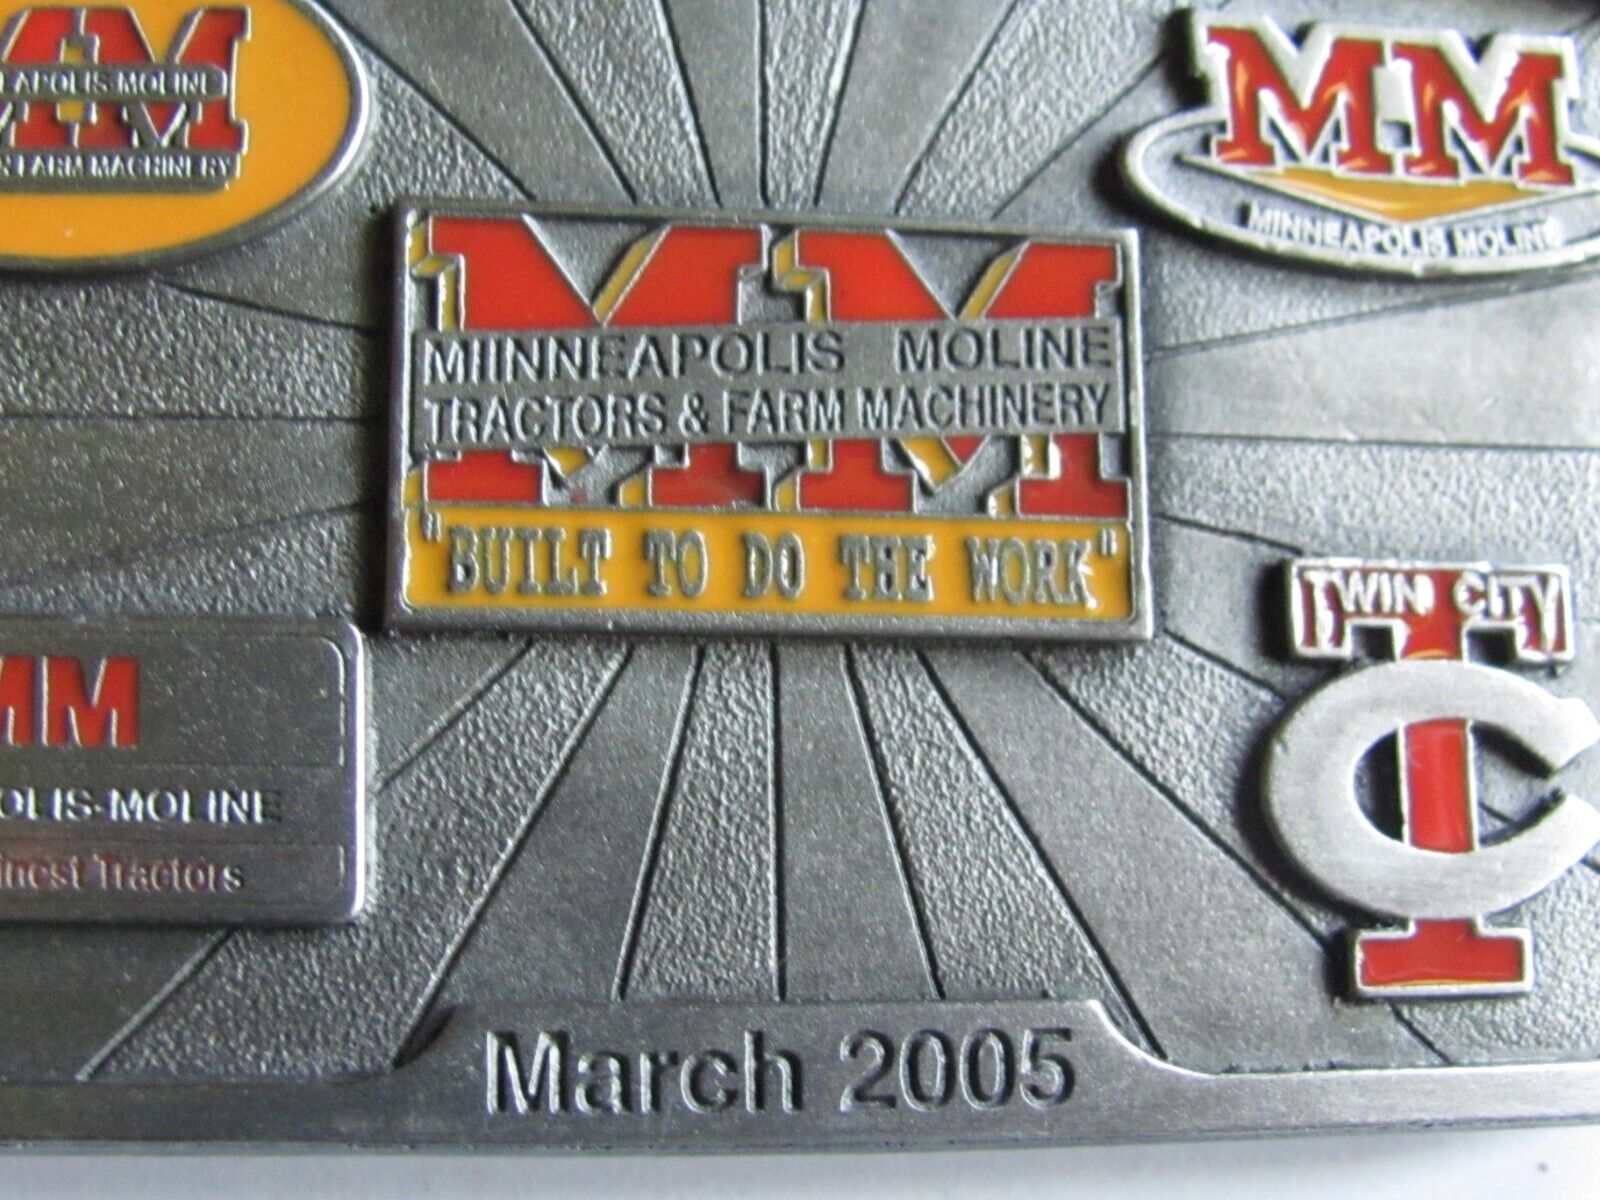 2005 MINNEAPOLIS MOLINE TRACTOR PRAIRIE GOLD RUSH EXPO SHOW BELT BUCKLE 95/250